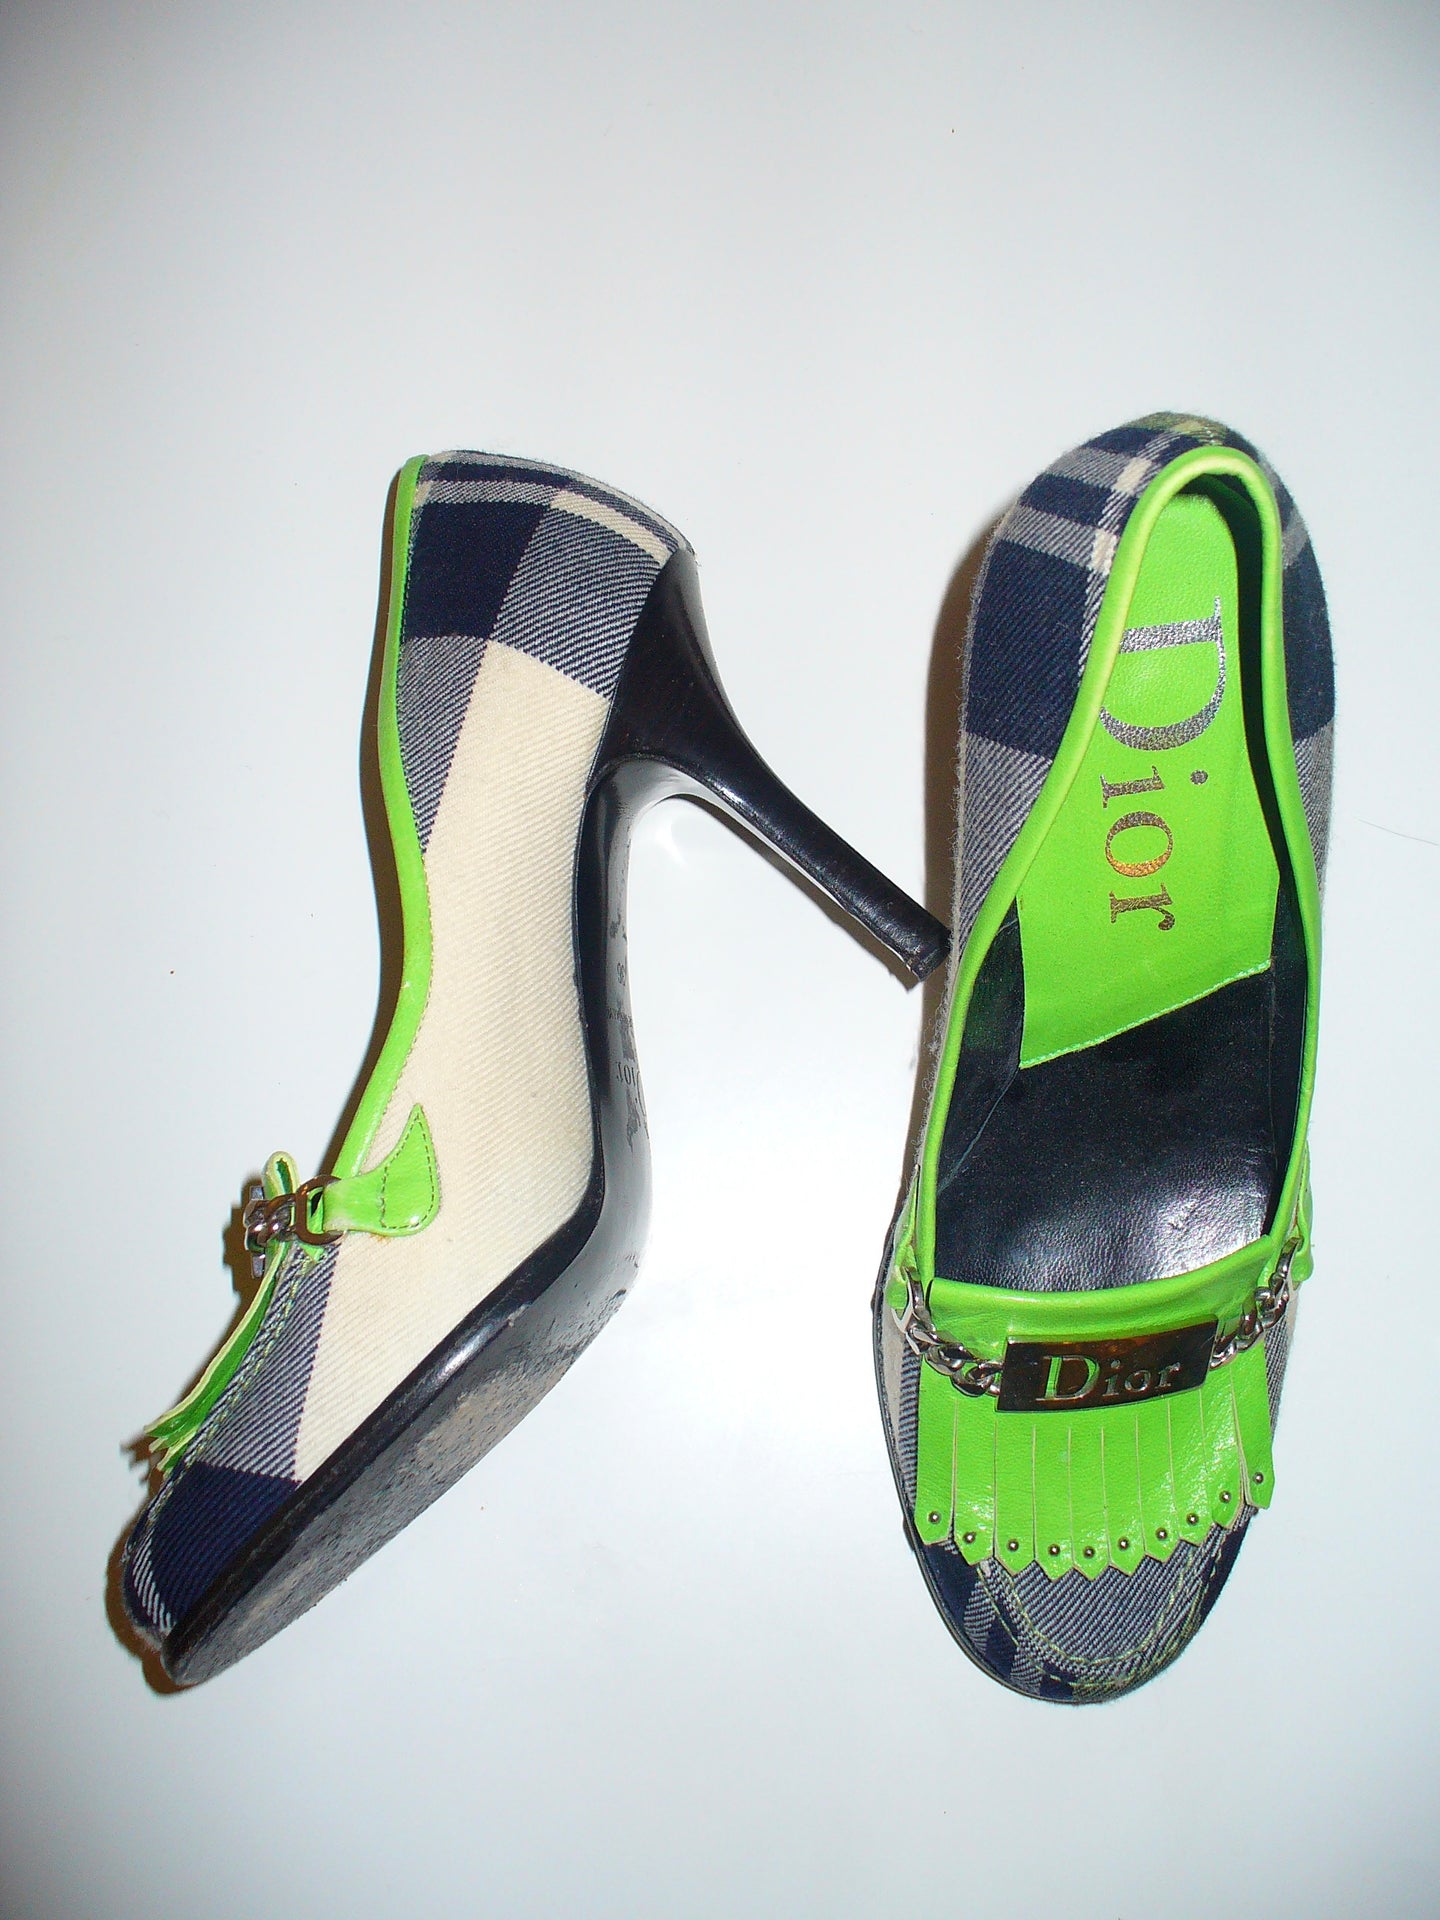 Christian Dior plaid heels